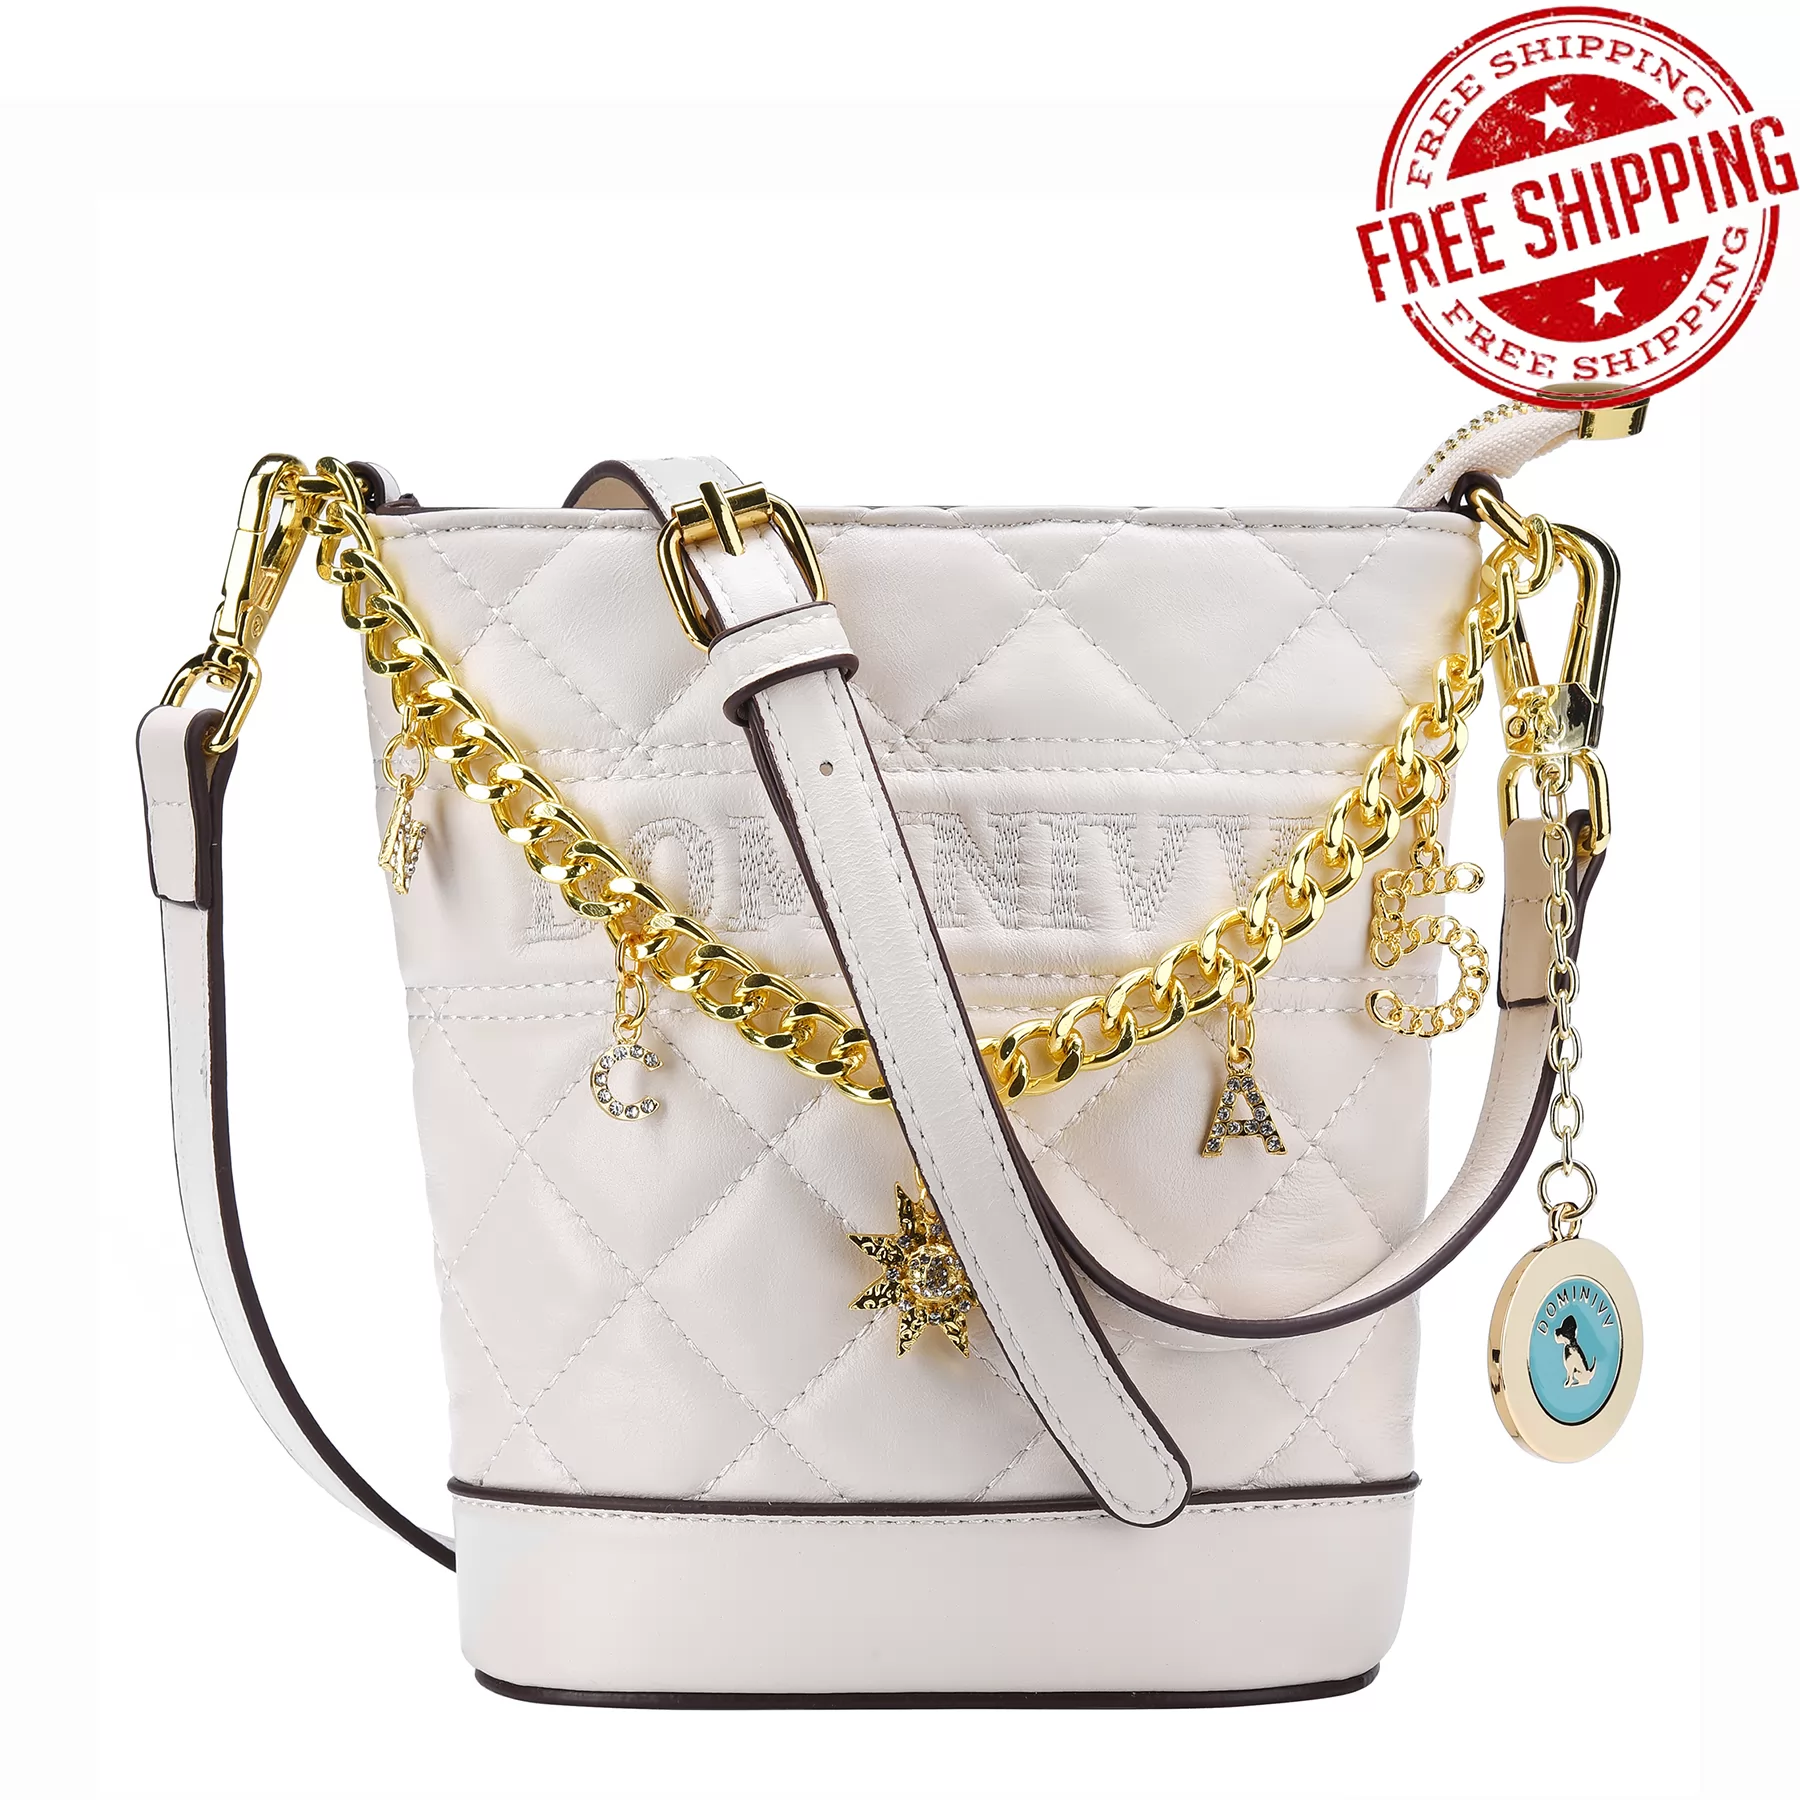 Dominivv Handbag- Bucket Bag-Light gold feature pendant